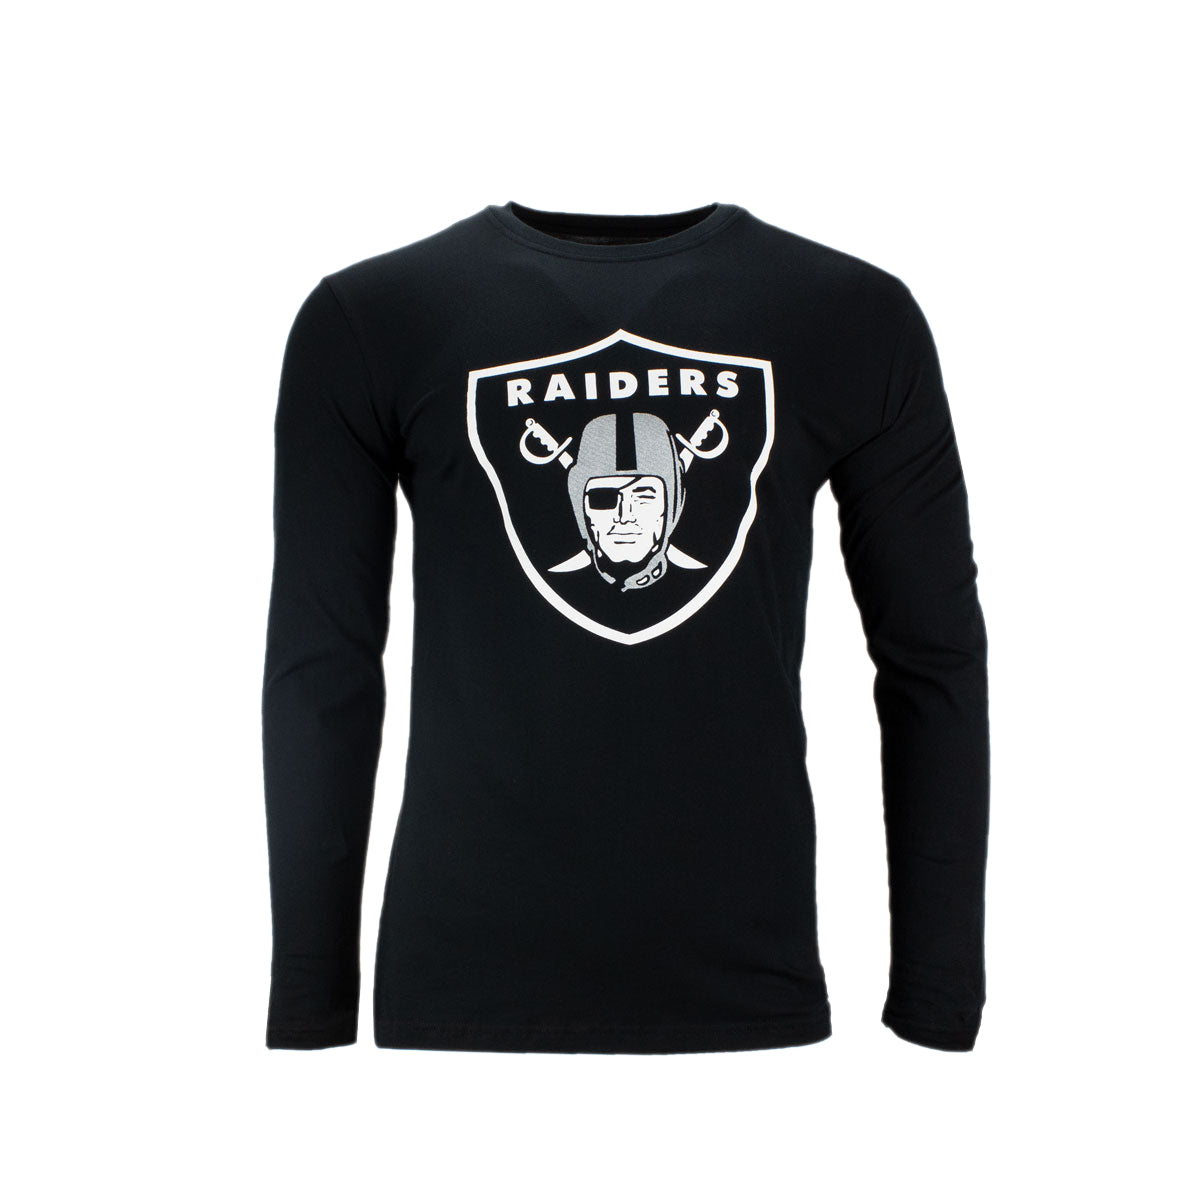 Fanatics NFL Las Vegas Oakland Raiders langarm Shirt Herren 1568MBLK1ADORA M